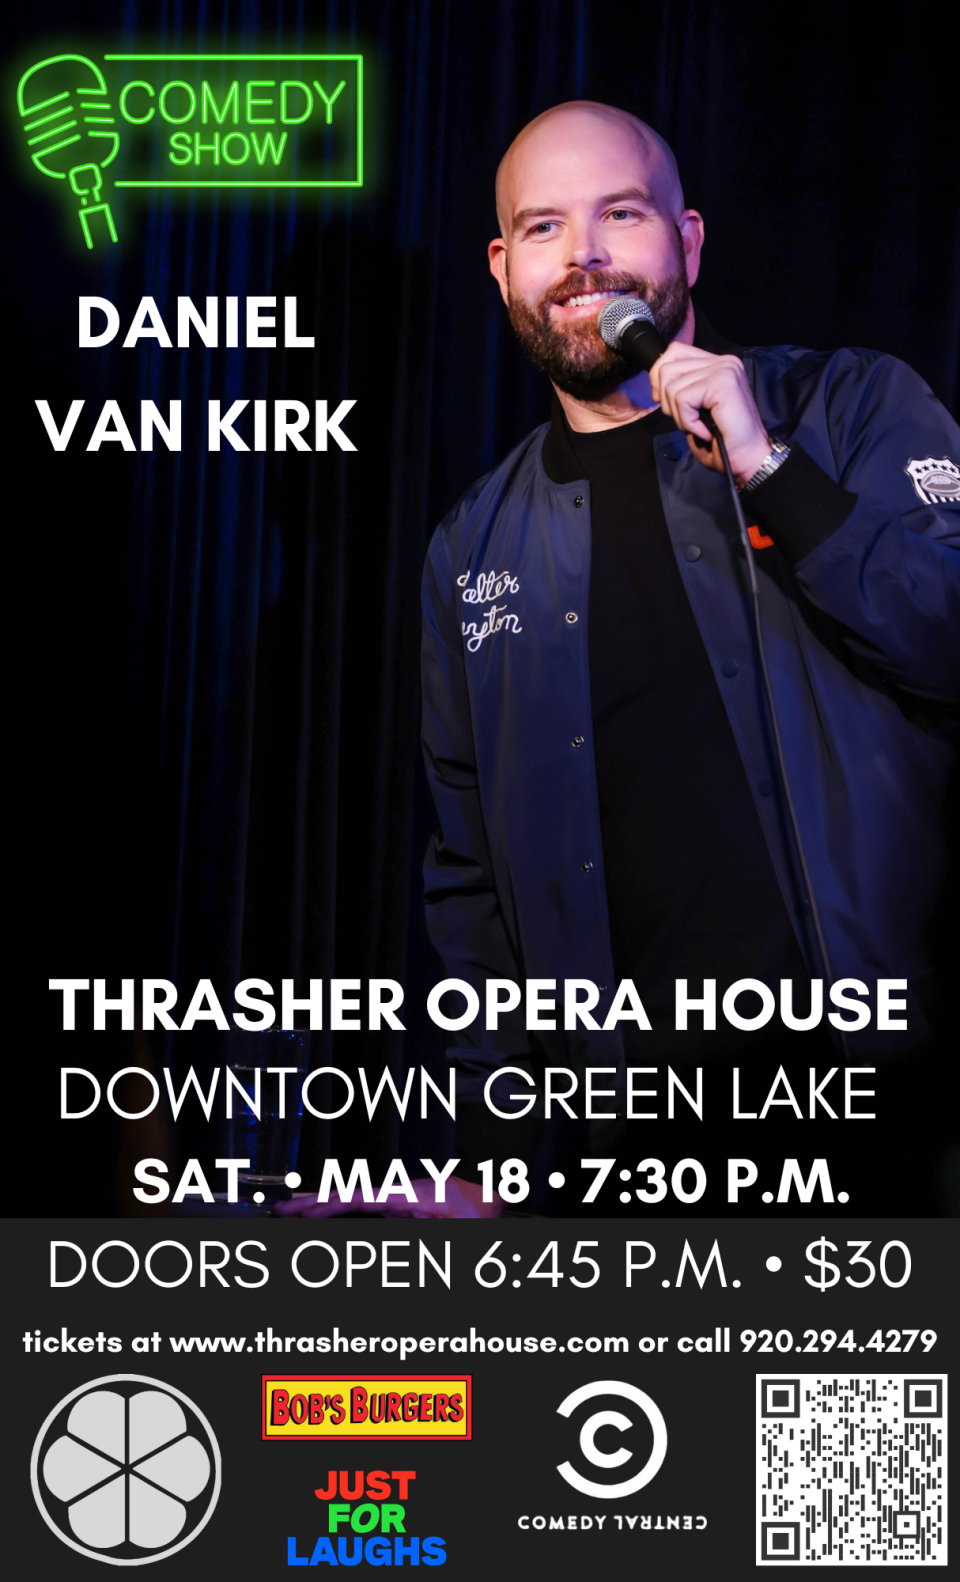 Comedian Daniel Van Kirk will perform May 18 at Thrasher Opera House in Green Lake.